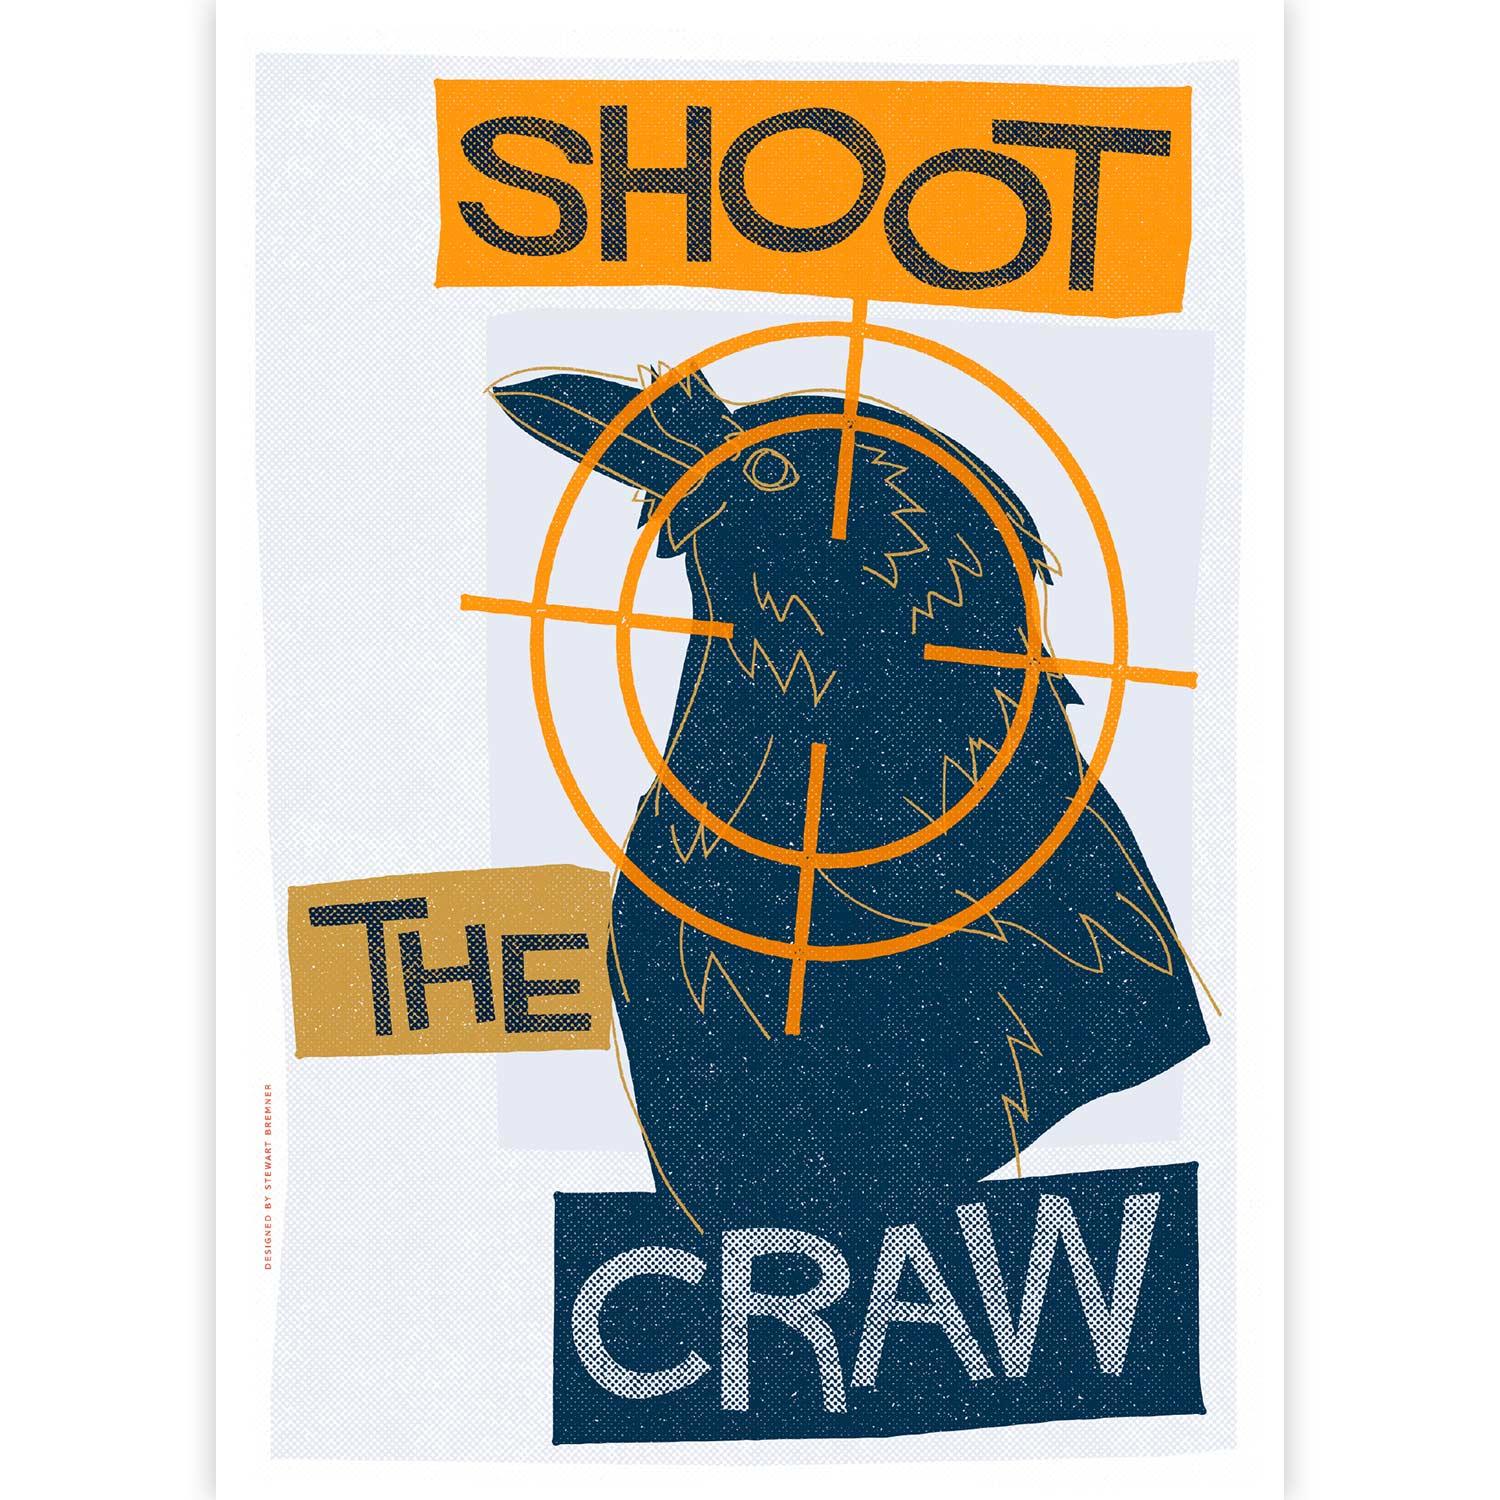 Shoot the Craw by Stewart Bremner